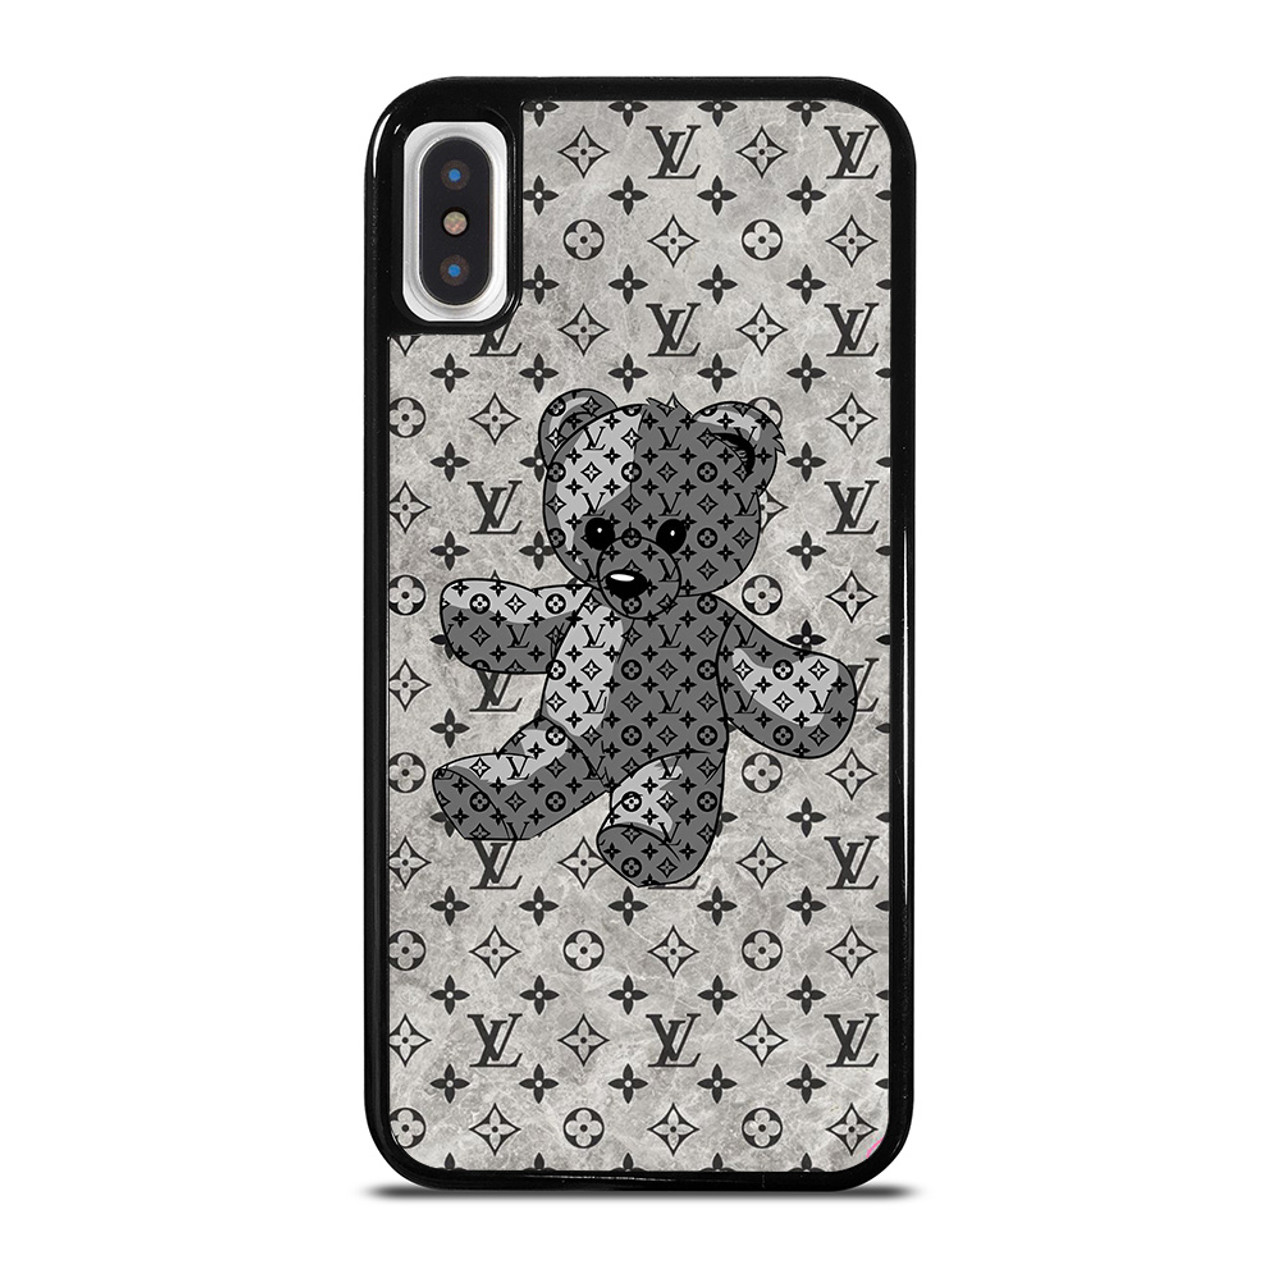 LV Bear iPhone X Defender Case